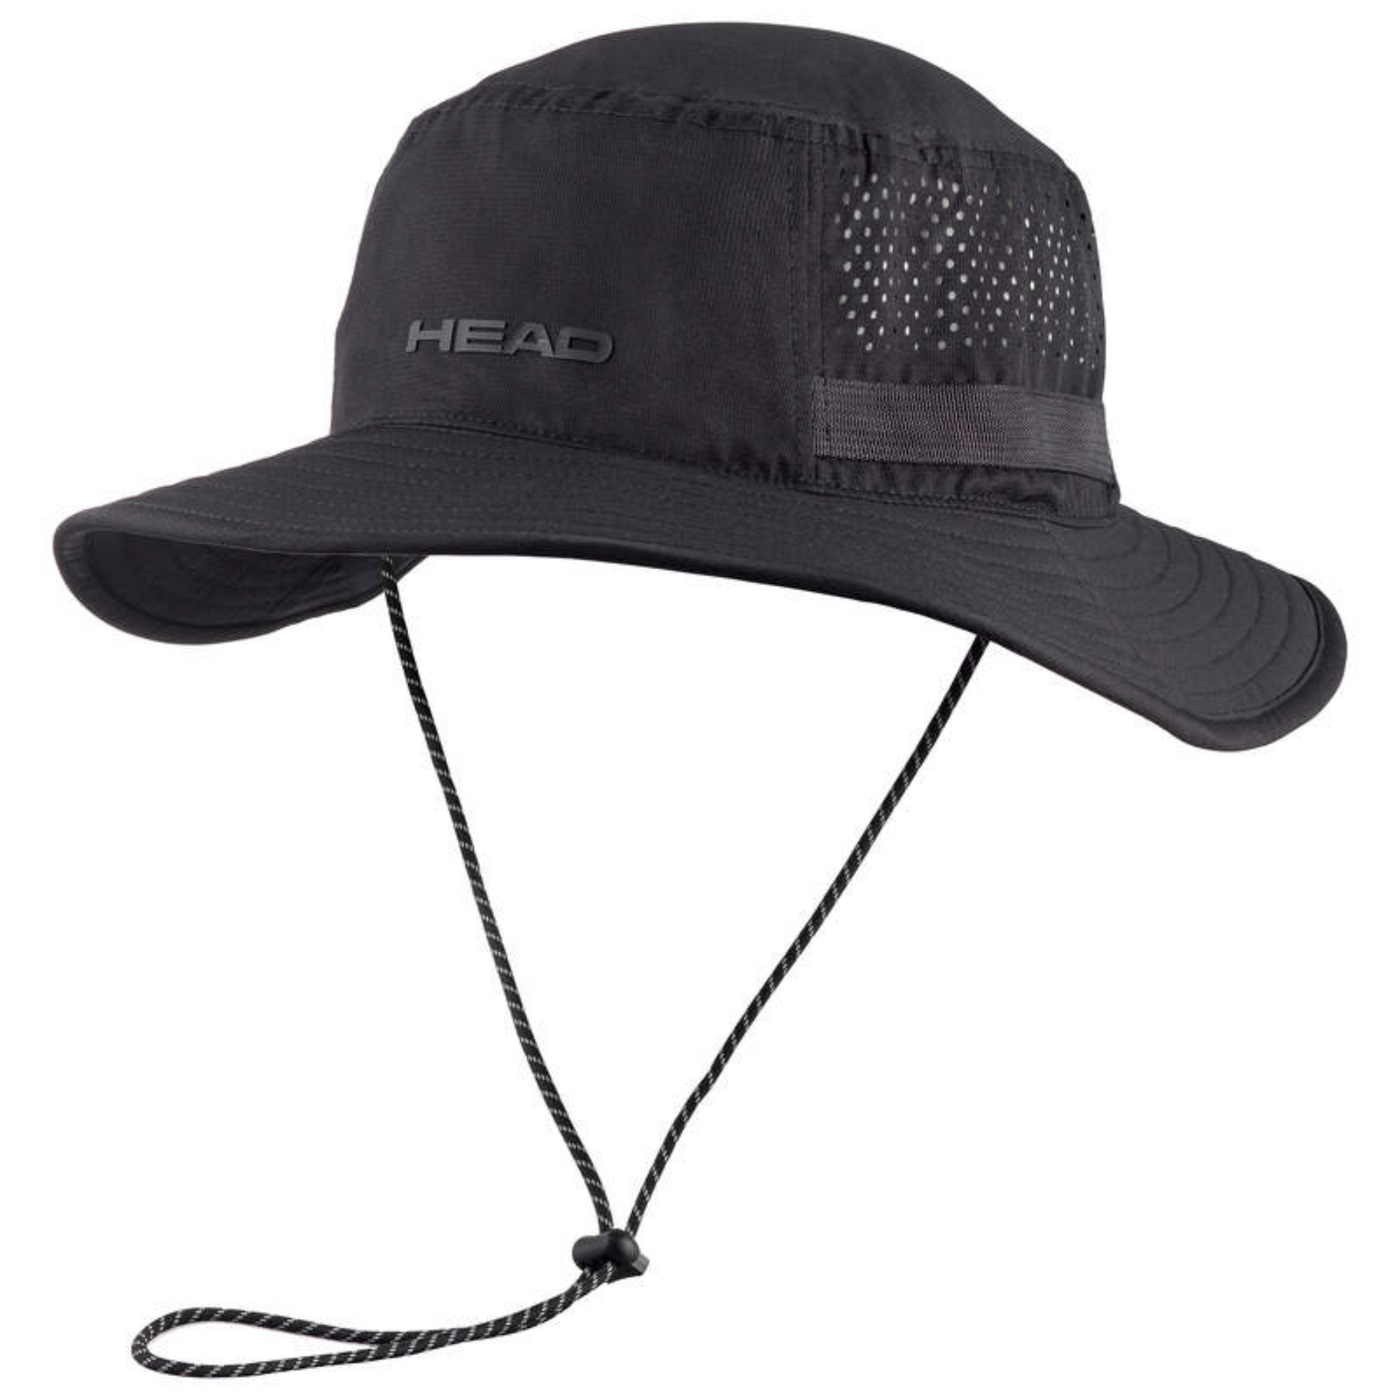 Head Bucket Tennis Hat - Black